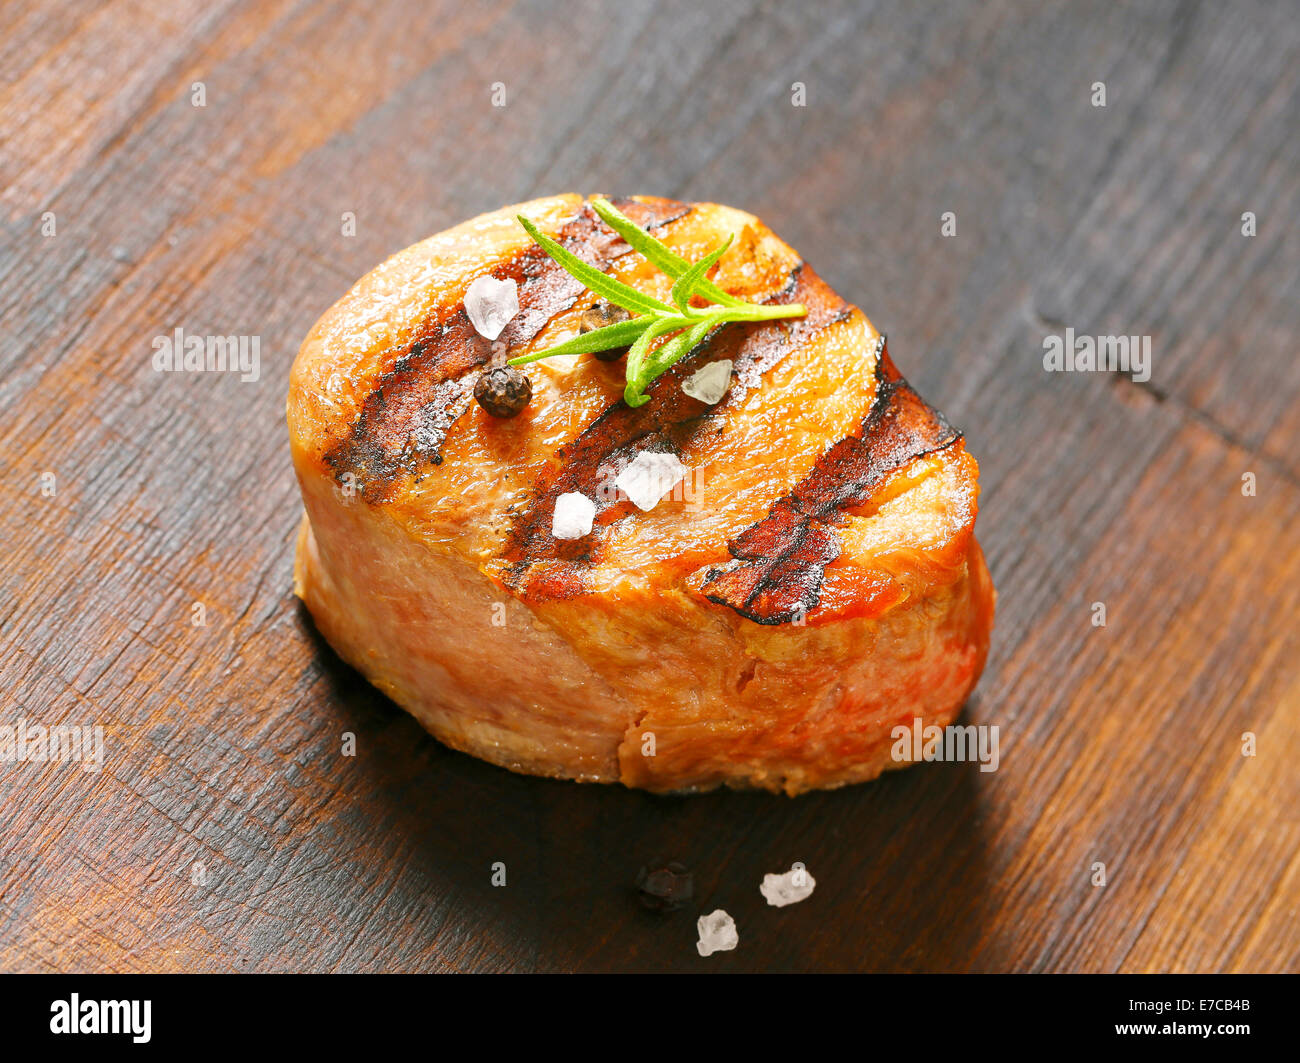 Grilled pork medallion on wood Stock Photo